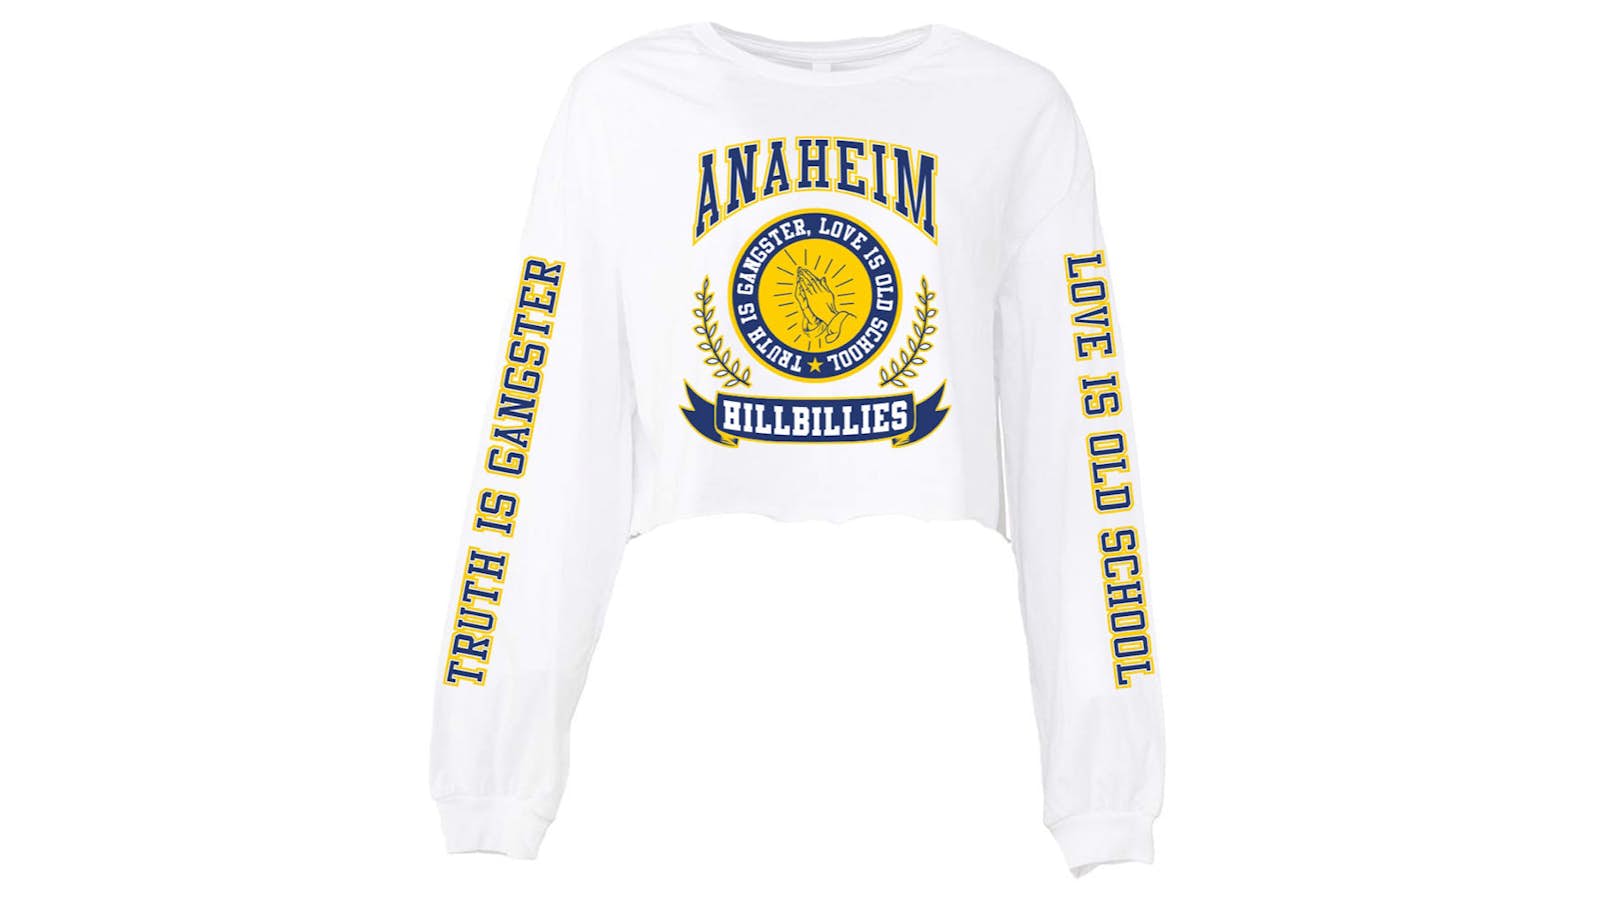 Anaheim Hillbillies truth is gangster love is old school shirt, hoodie,  sweatshirt and tank top